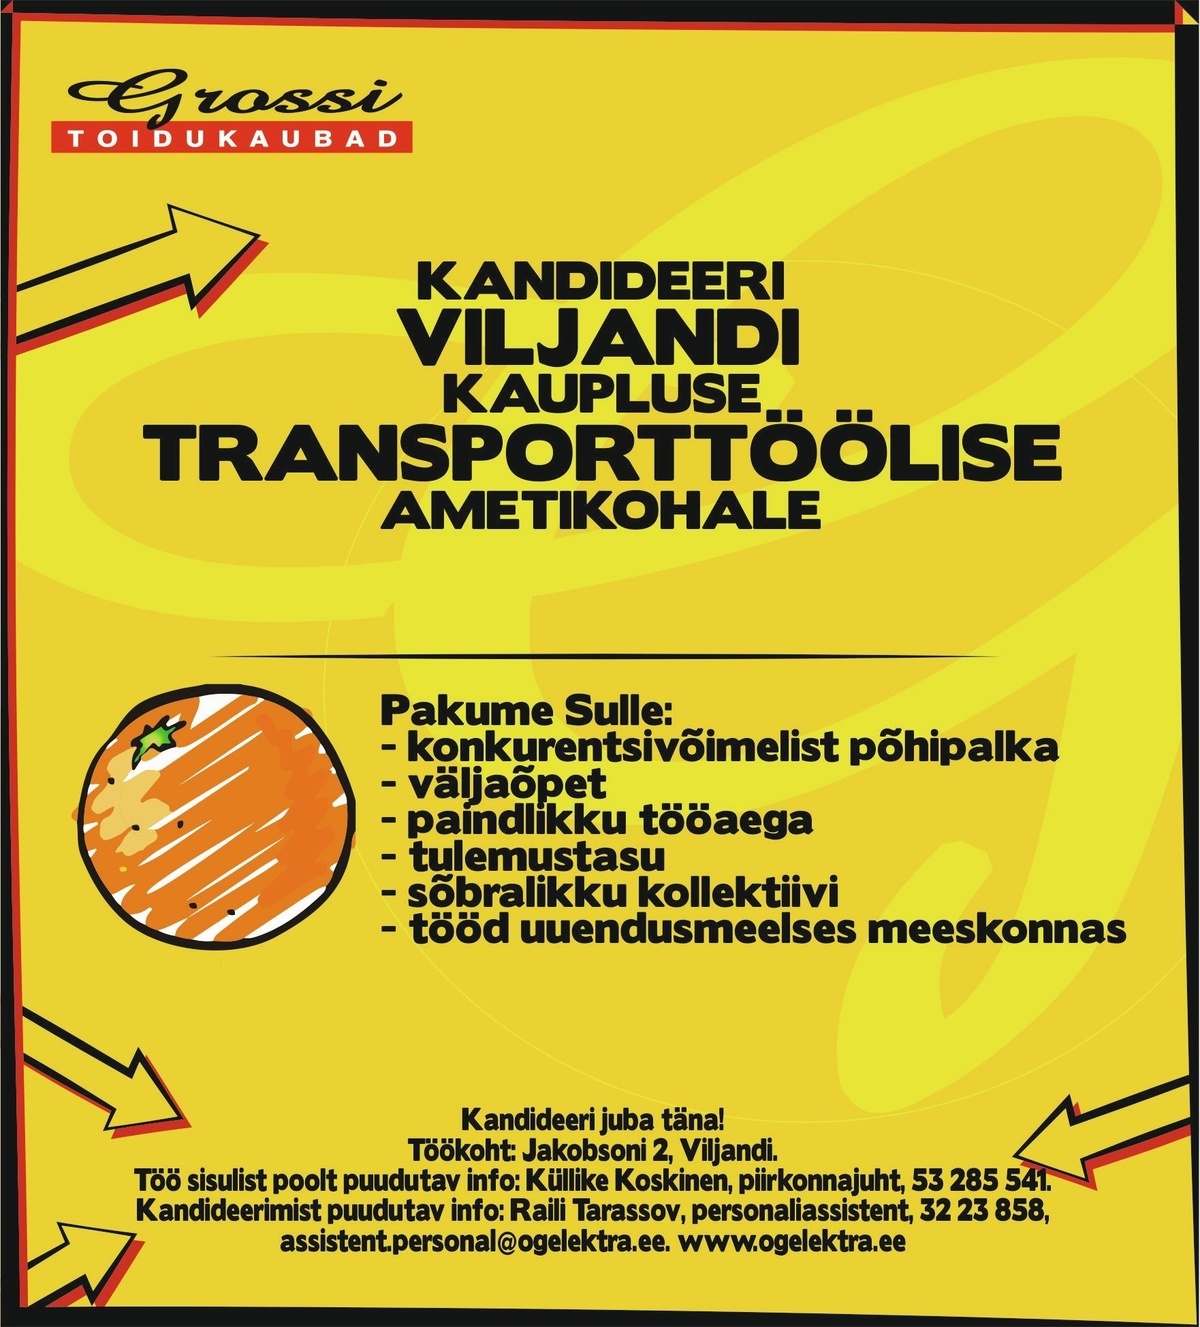 OG Elektra AS Transporttööline (Viljandi)